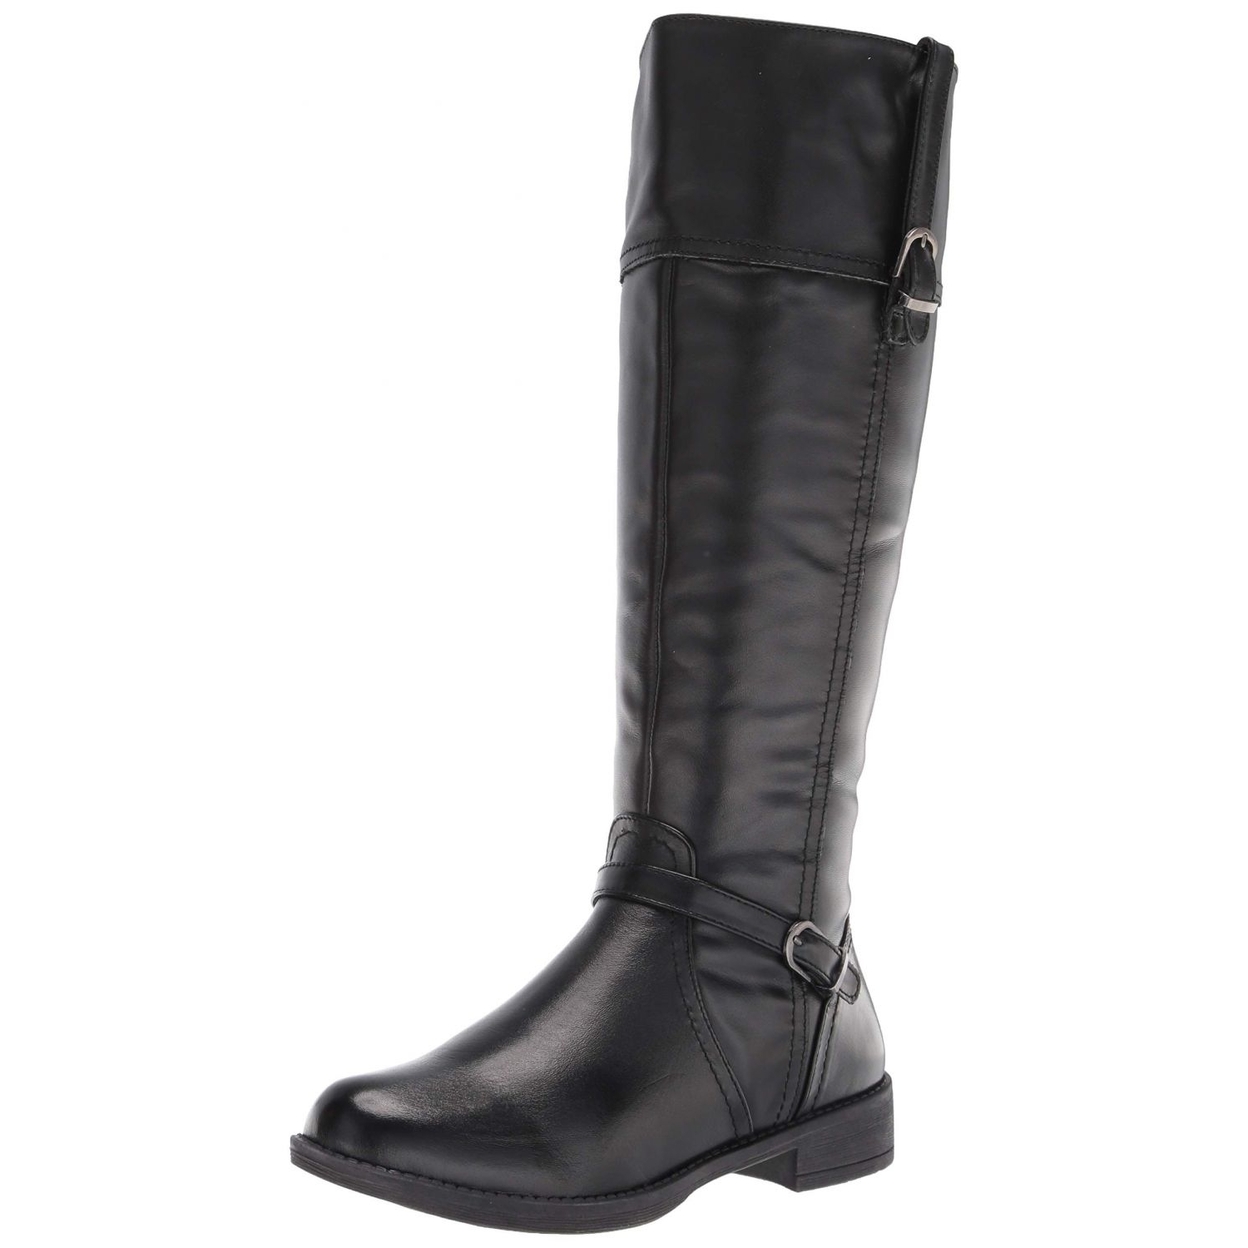 Propet Womens Tasha Zippered Casual Boots Knee High Low Heel 1-2 - Black BROWN - BROWN, 8 X-Wide